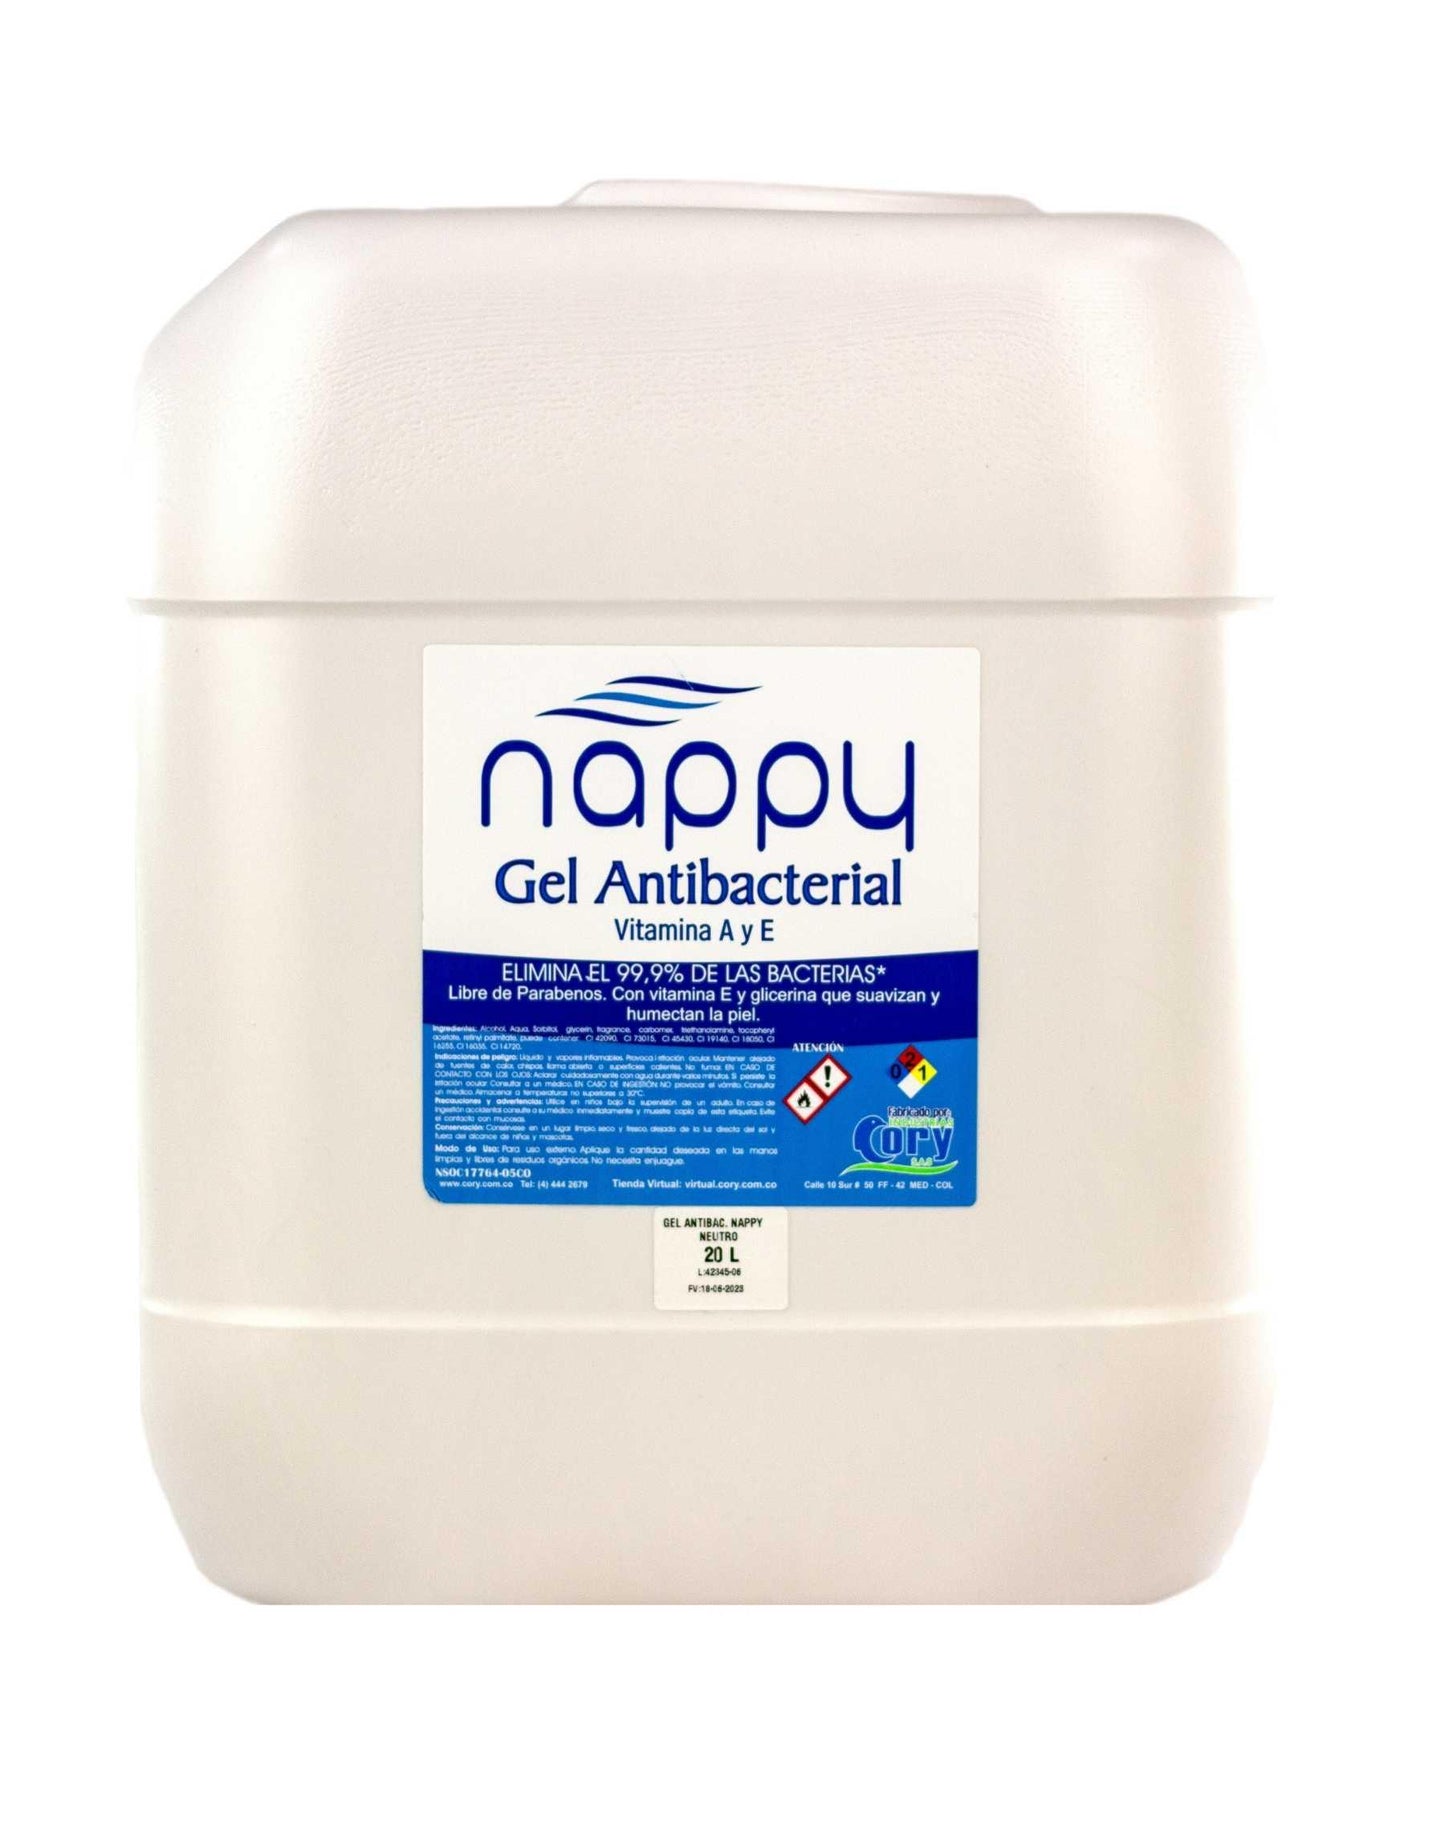 Gel Antibacterial Nappy